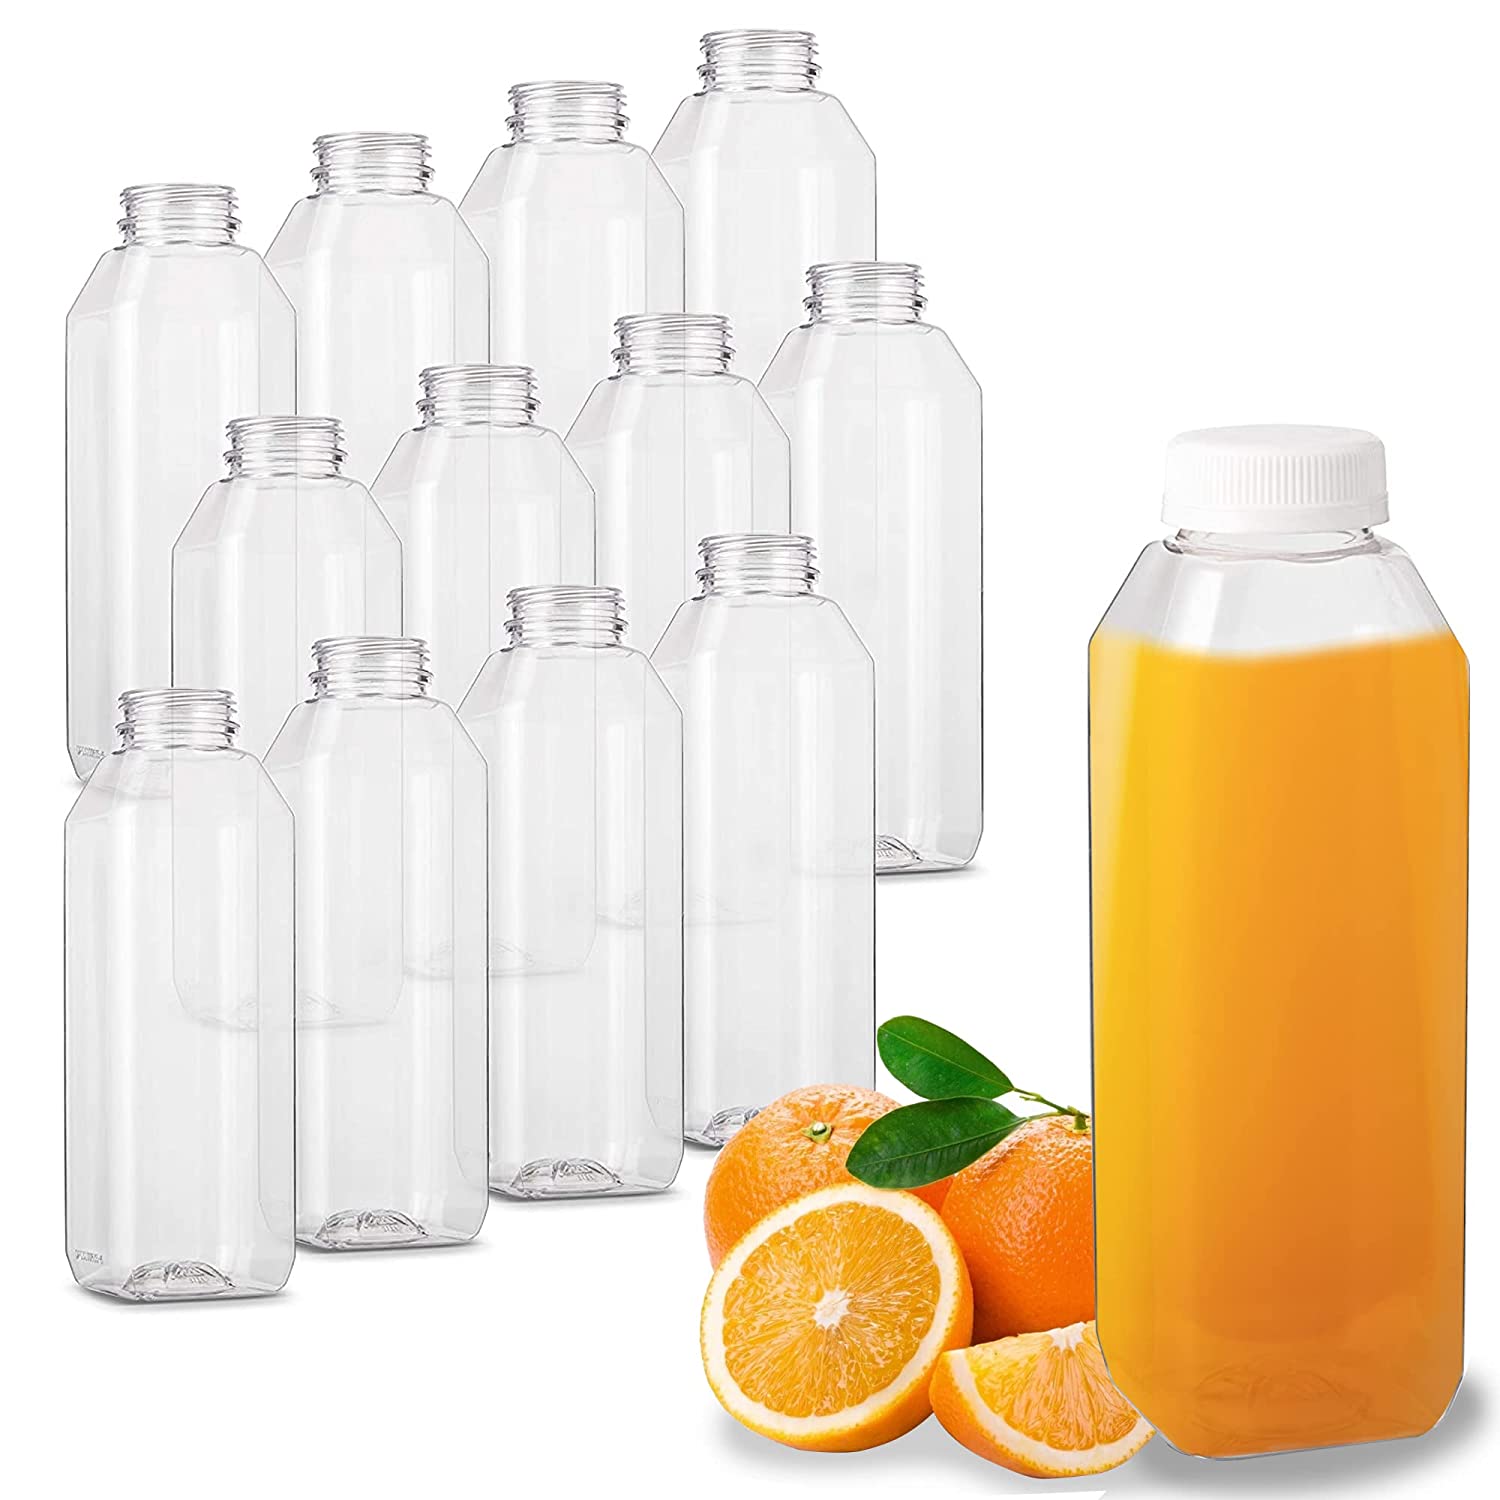 New Tropicana Pure Premium PET clear container 'unique' in juice aisle